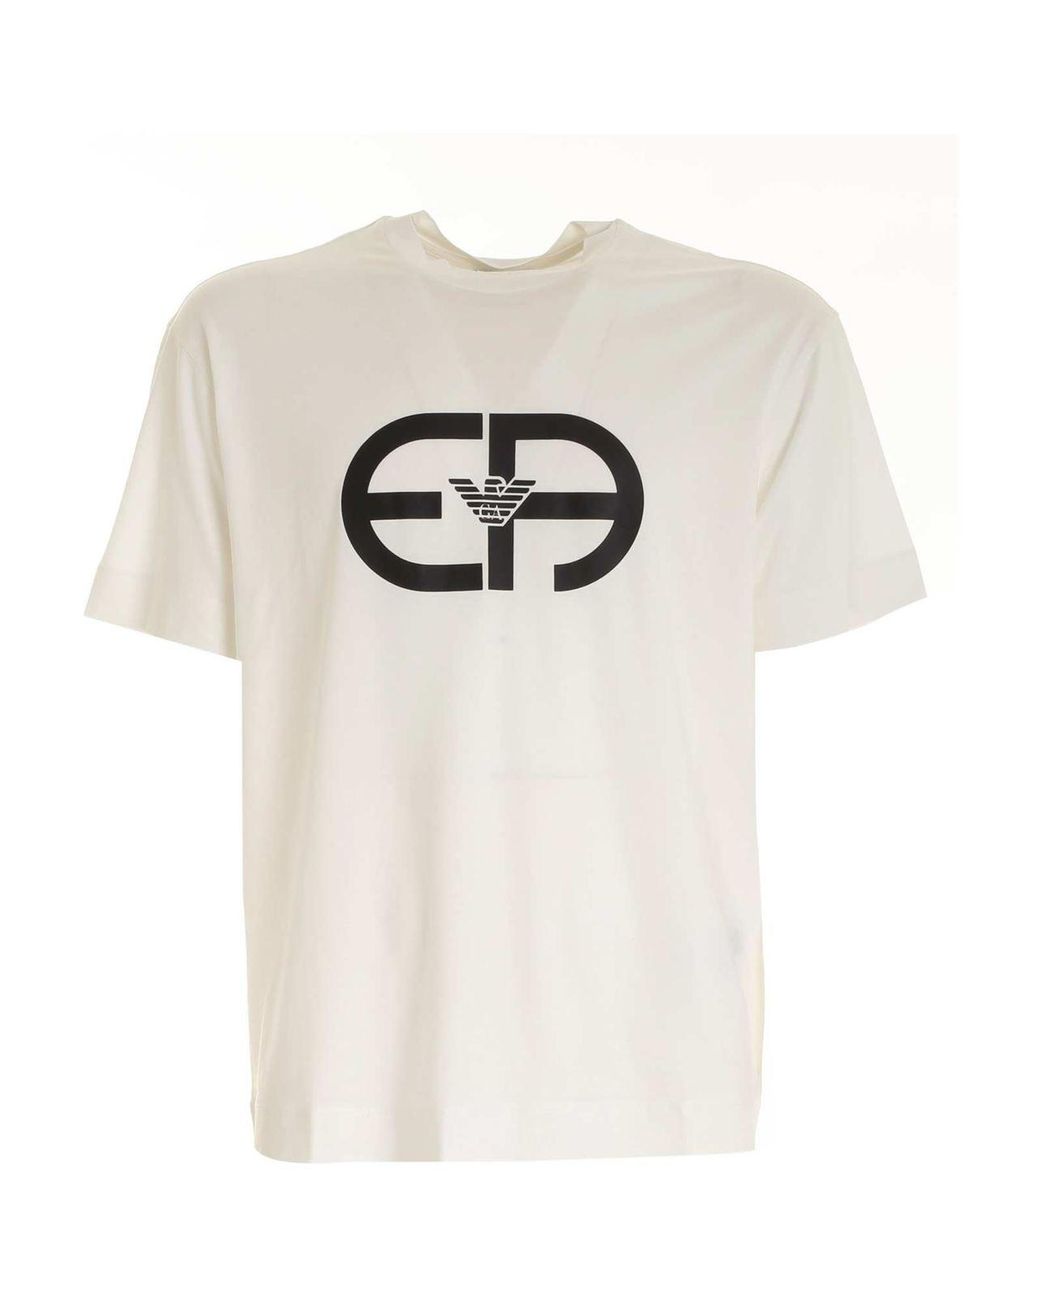 Emporio Armani Cotton Black Print T-shirt In White for Men - Lyst